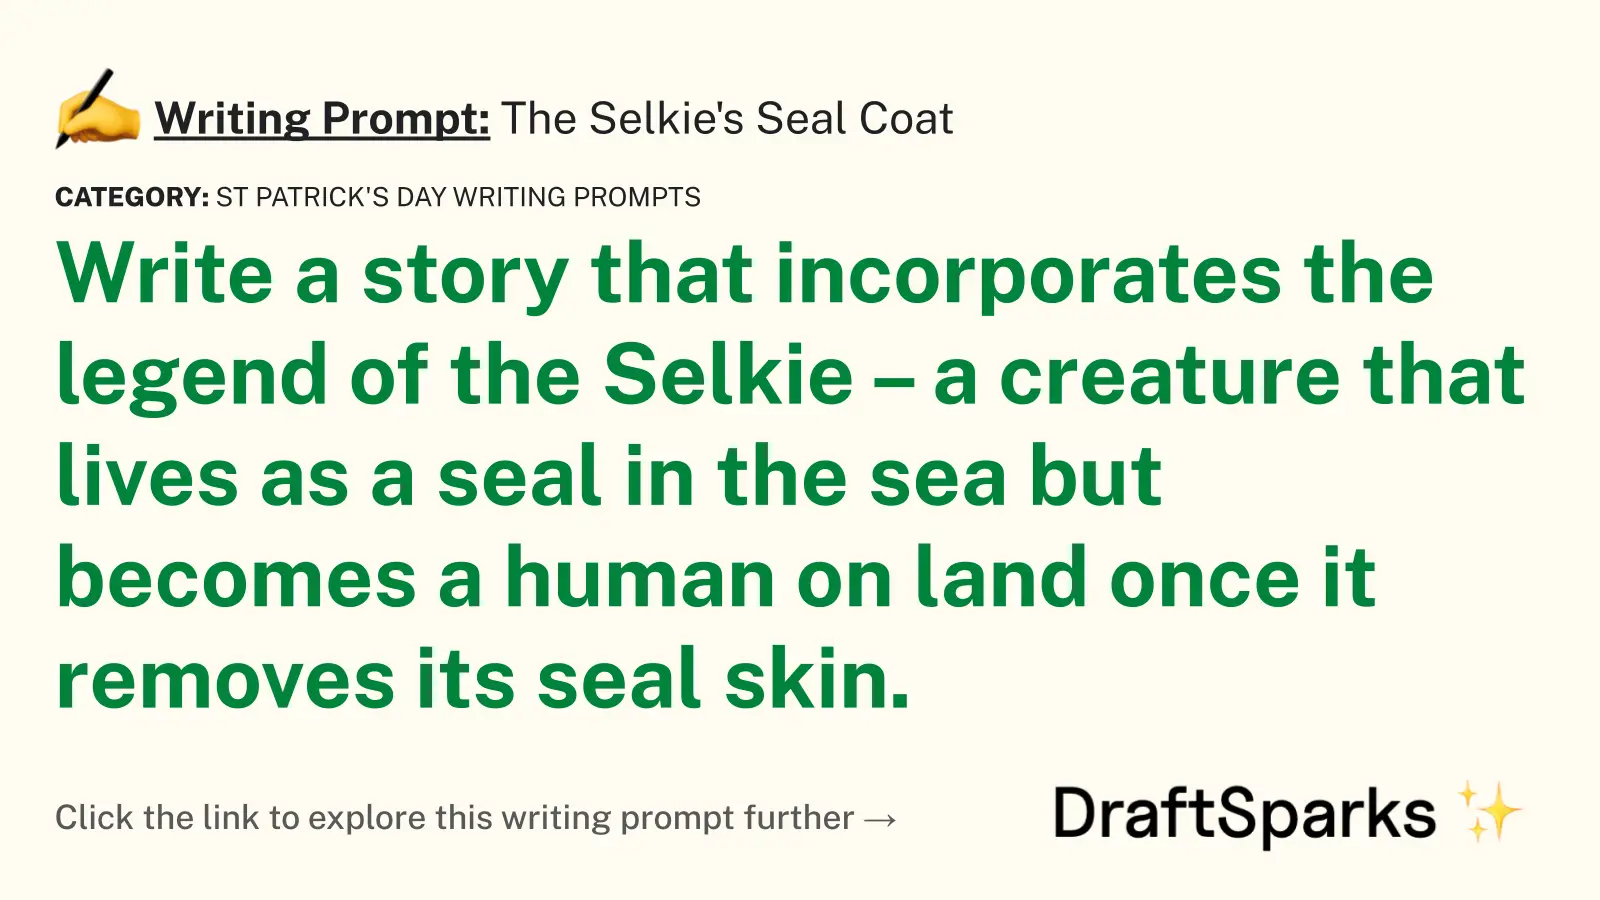 The Selkie’s Seal Coat